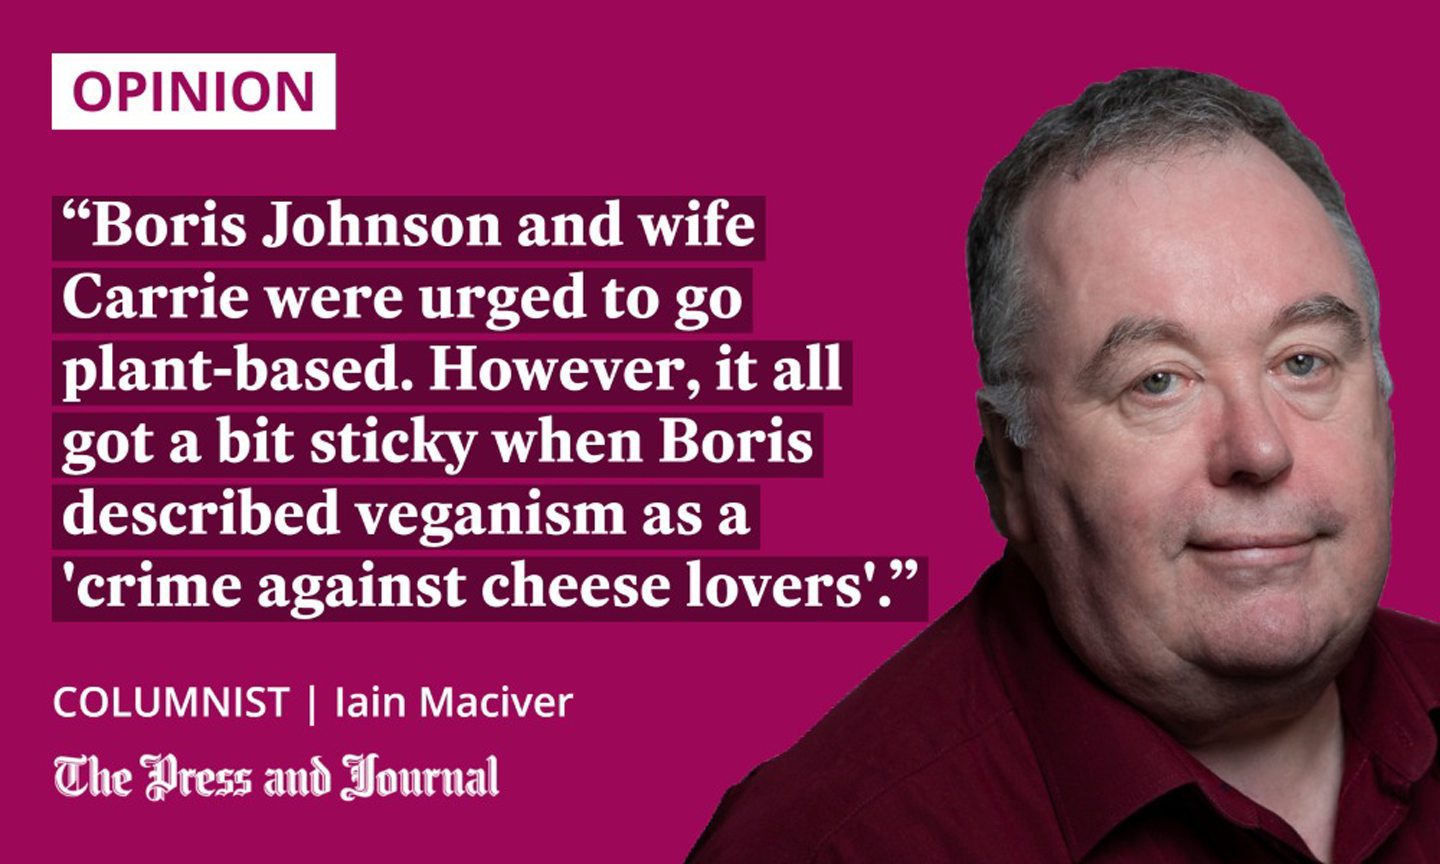 P&J columnist Iain Maciver